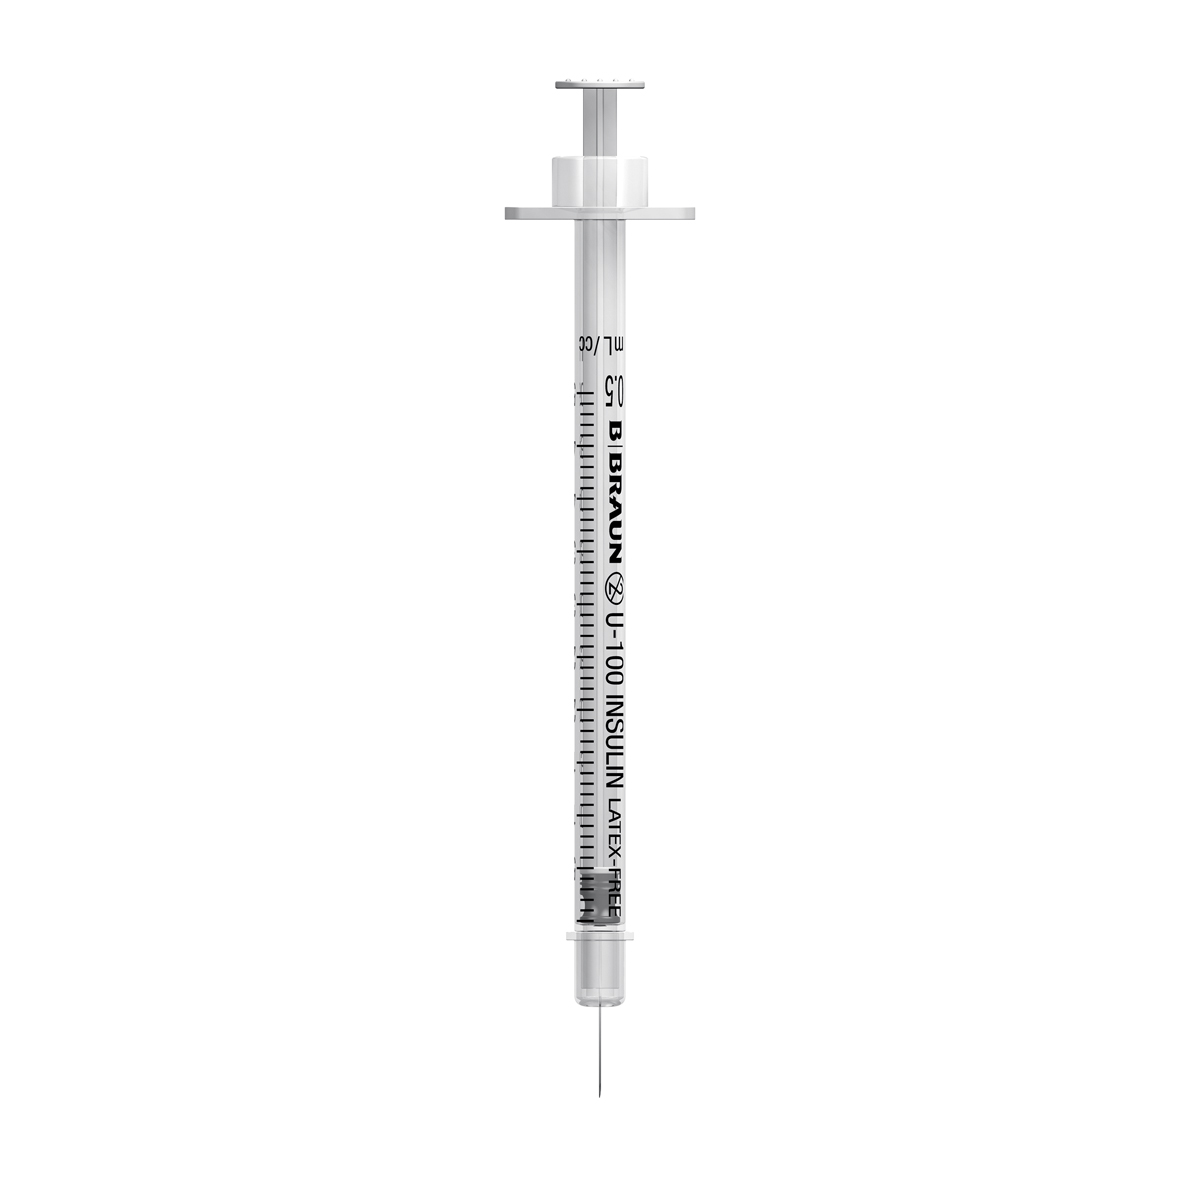 0.5ml 30G 8mm needle BBraun Omnican insulin syringe